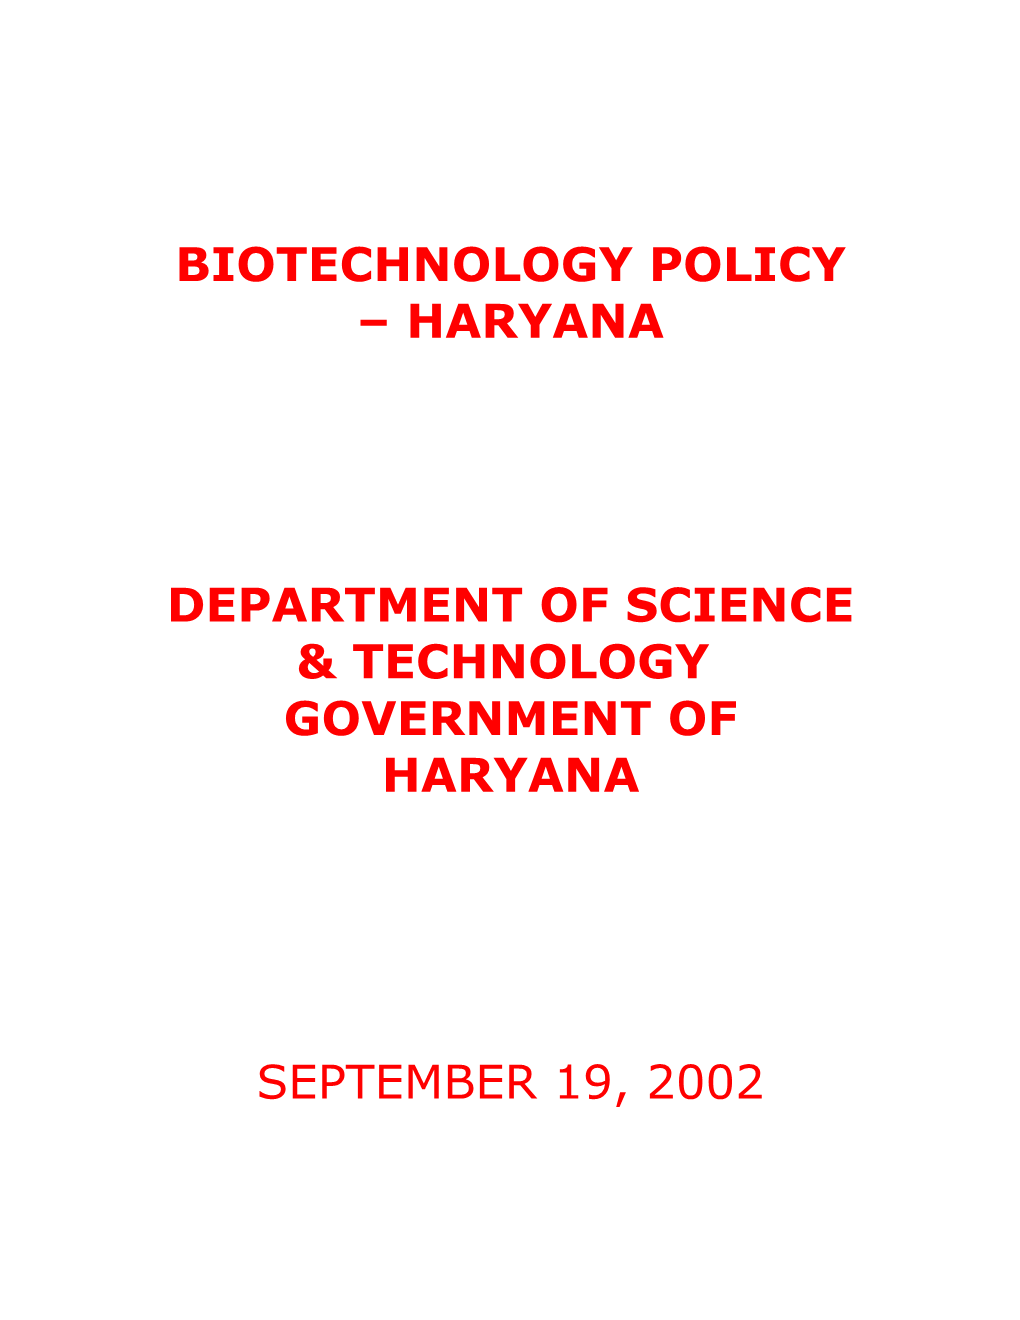 Biotechnology Policy Haryana